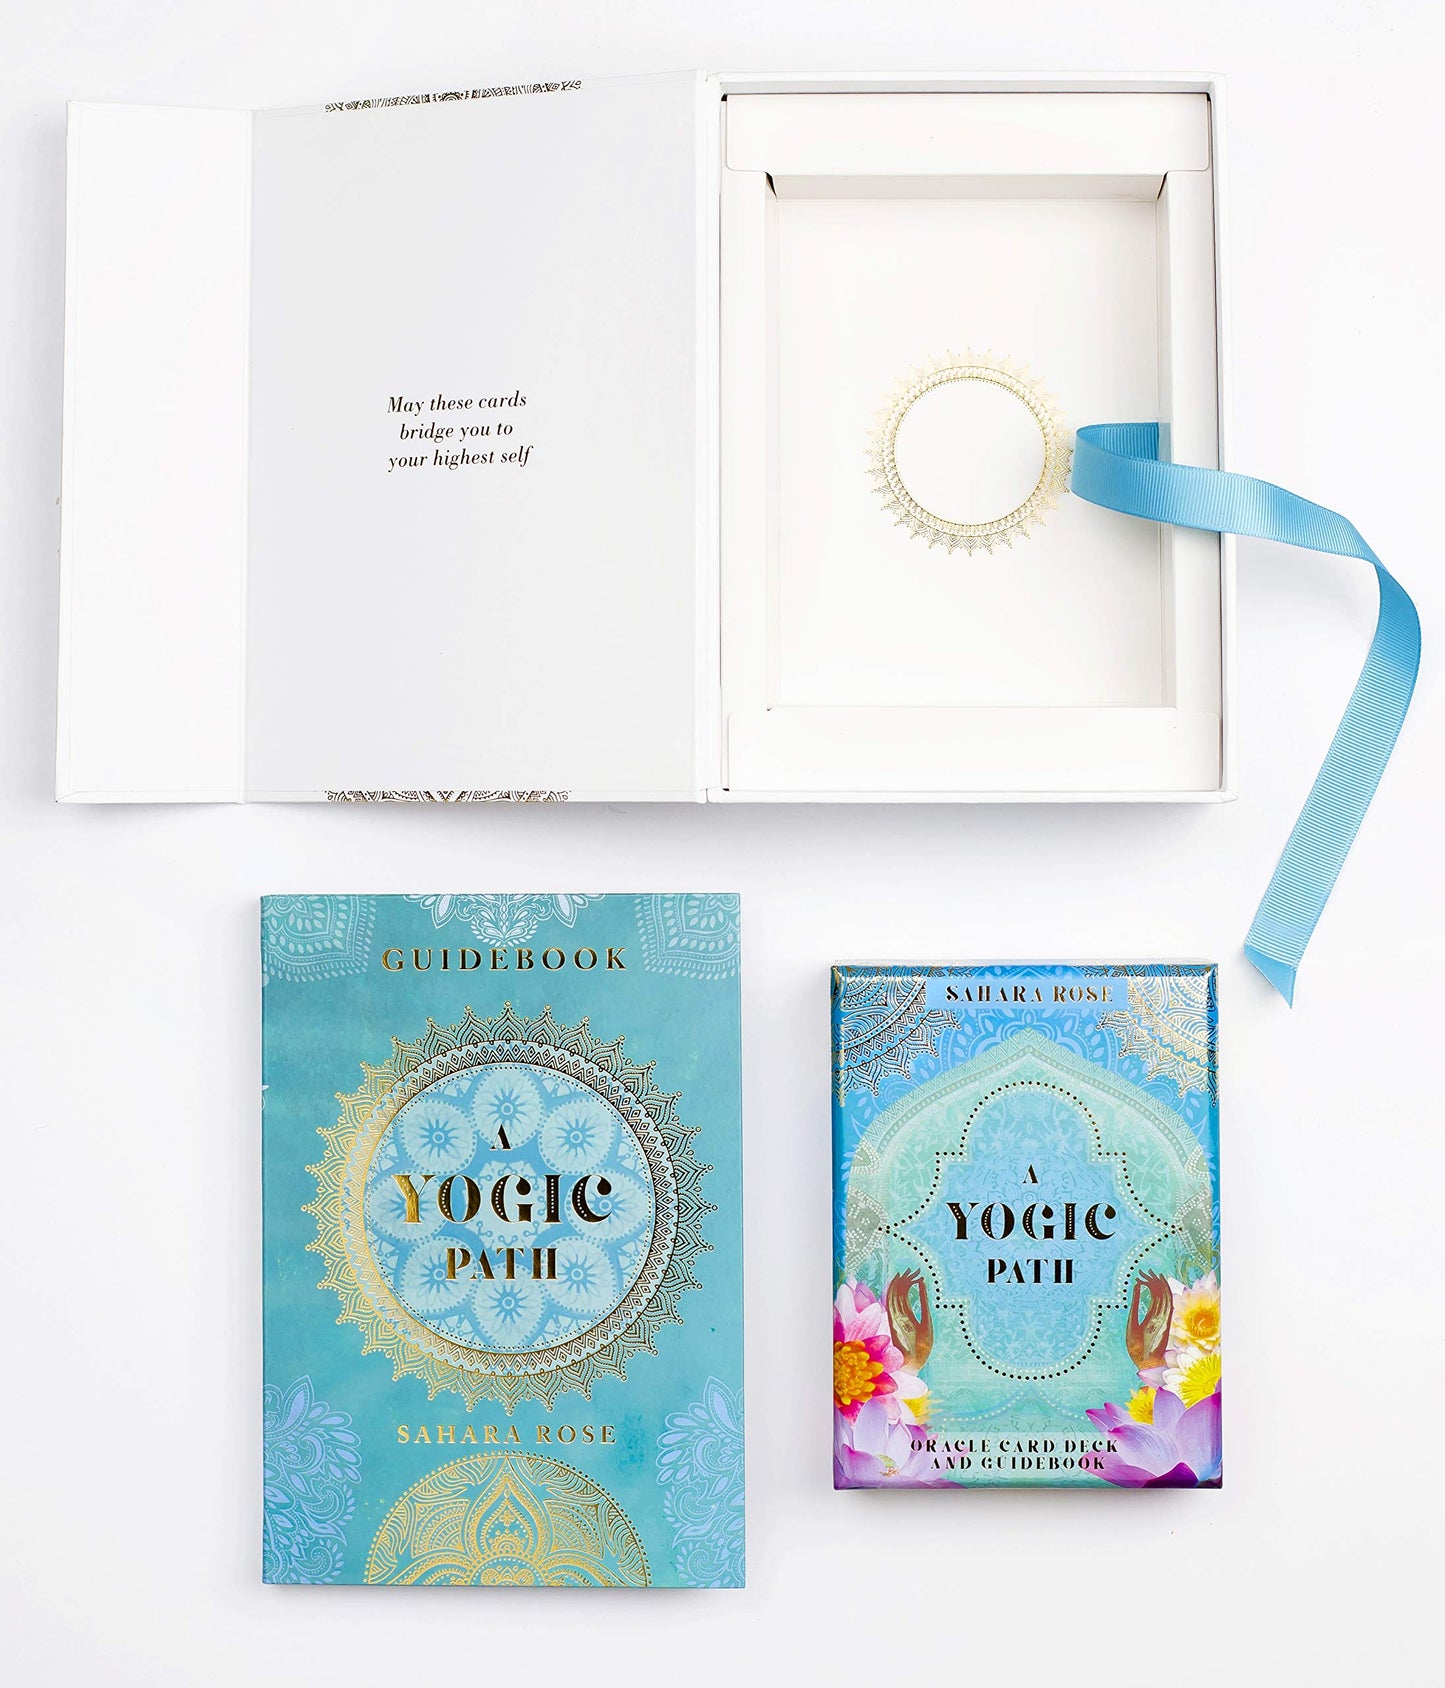 A Yogic Path Oracle Deck and Guidebook (Keepsake Box Set) by Sahara Rose Ketabi; Illustrated by Danielle Noel